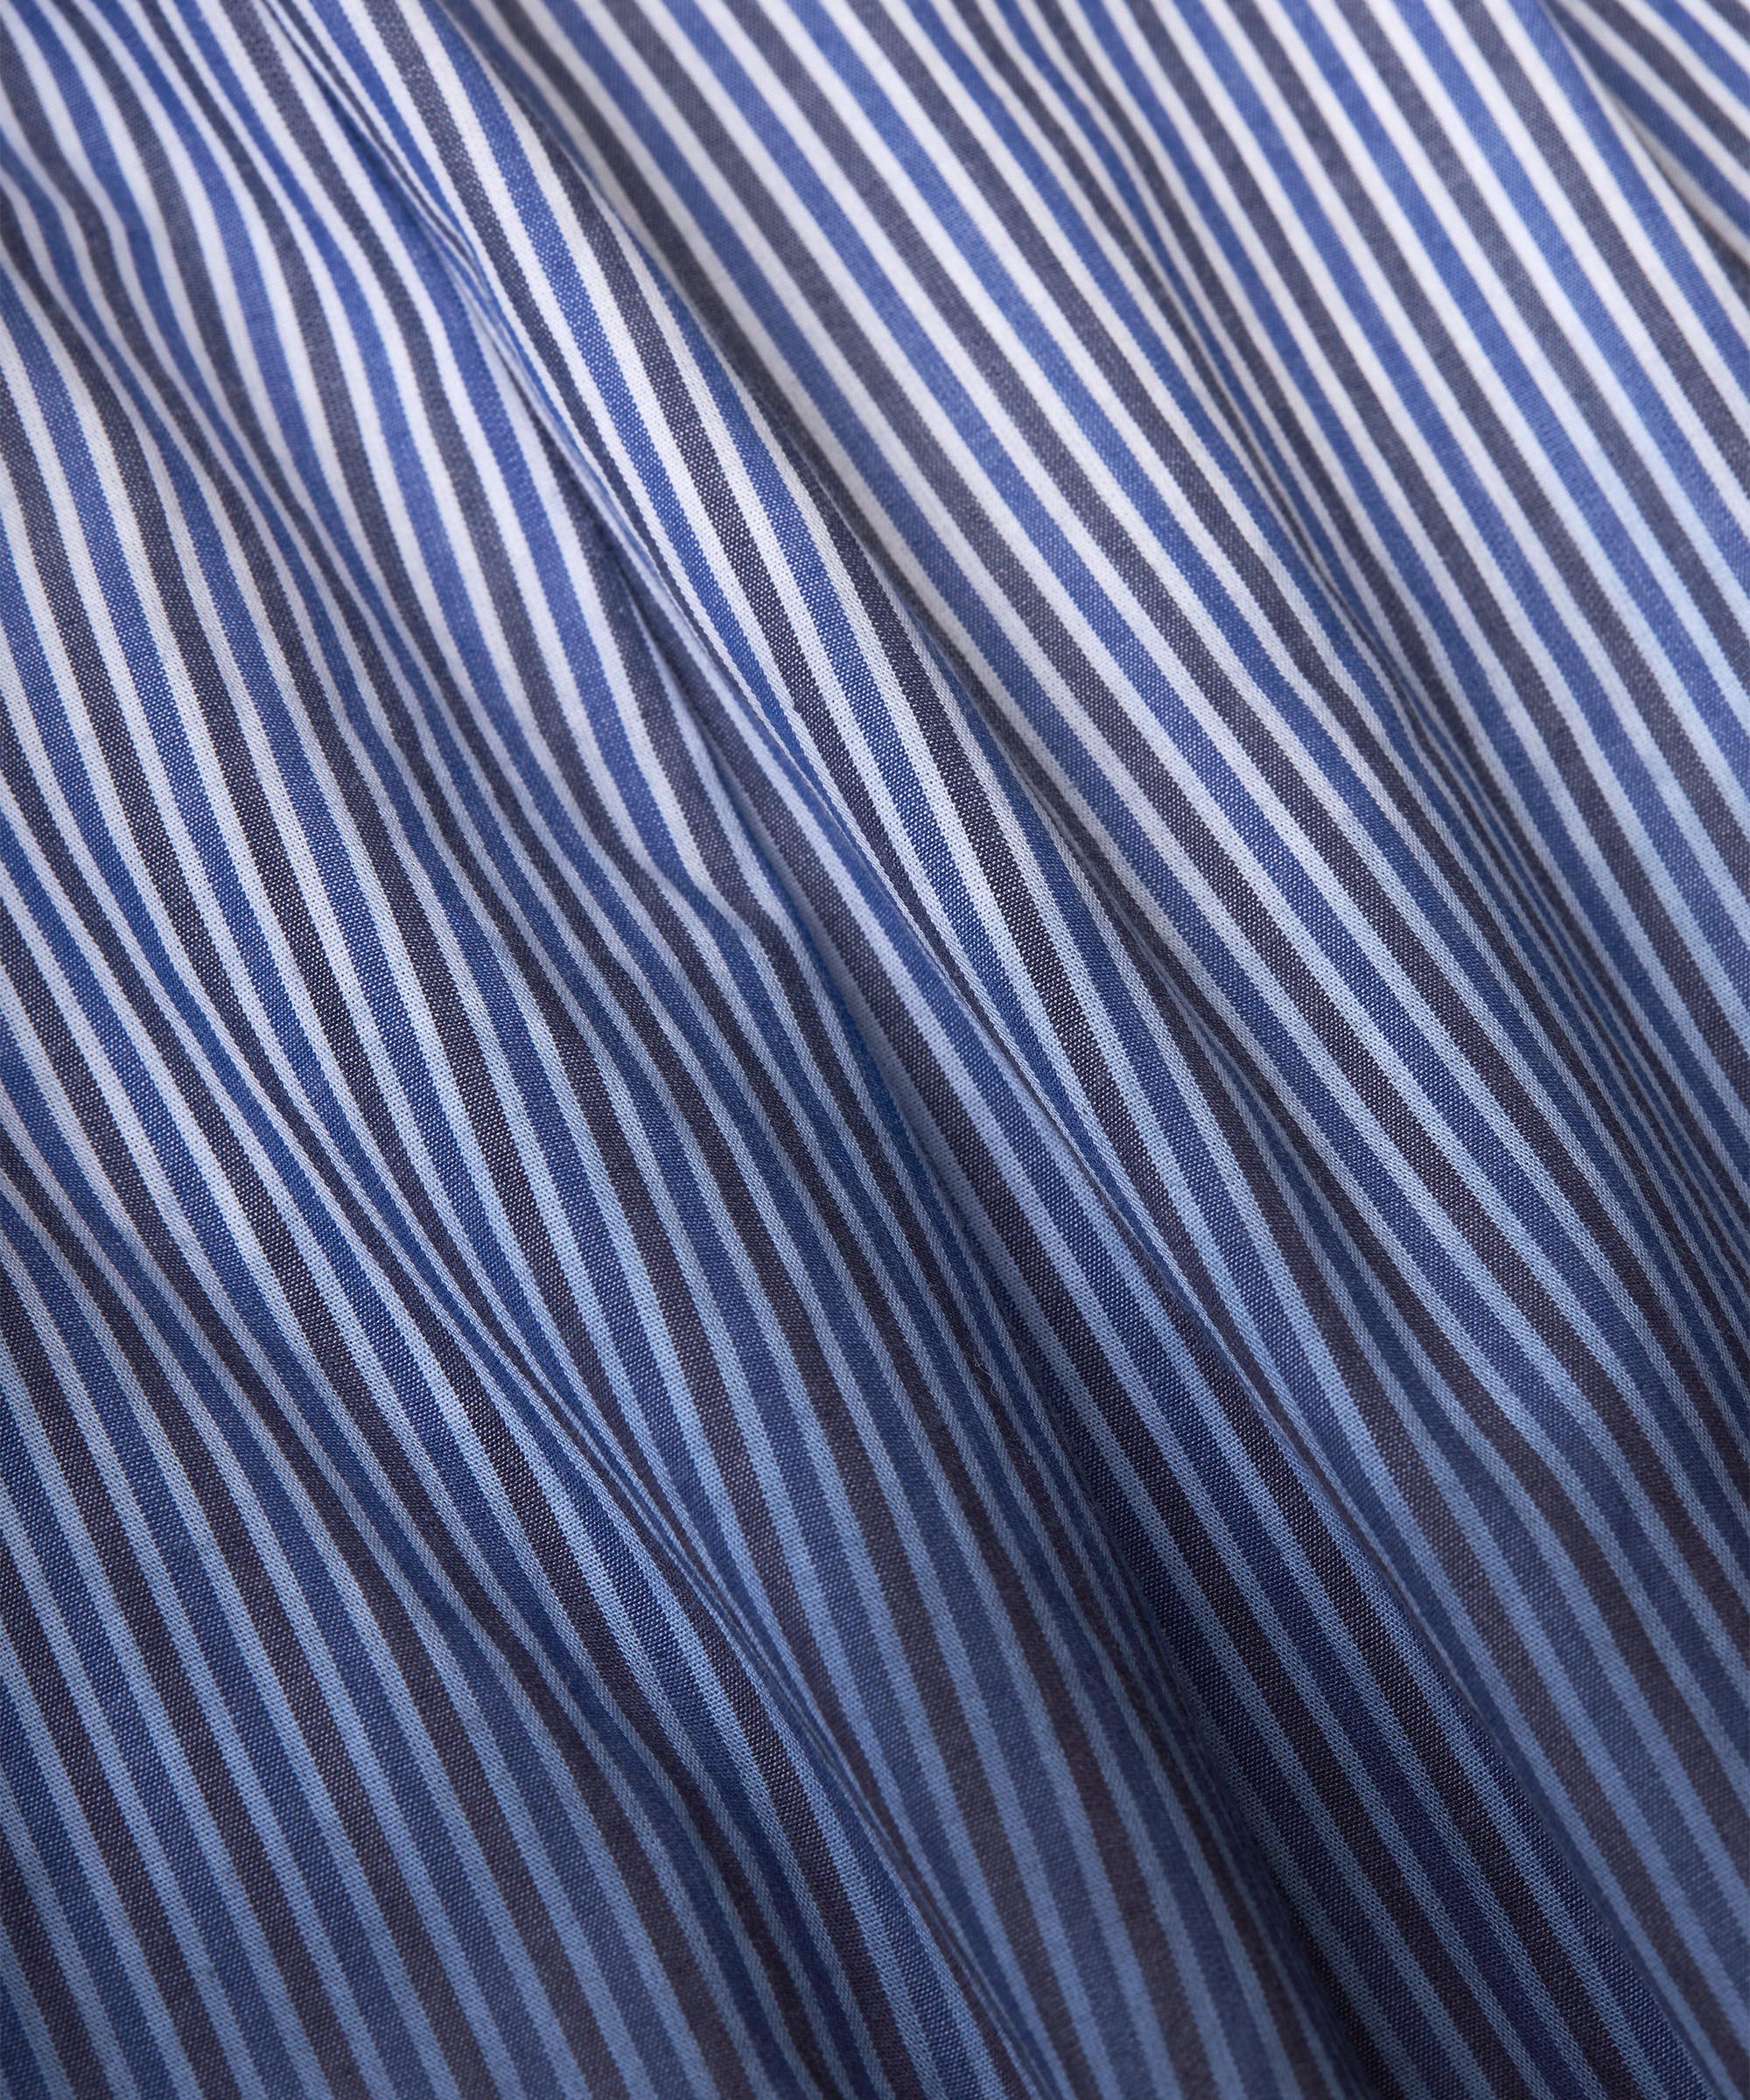 1006818 MaSabin Striped Skirt - Maritime Blue